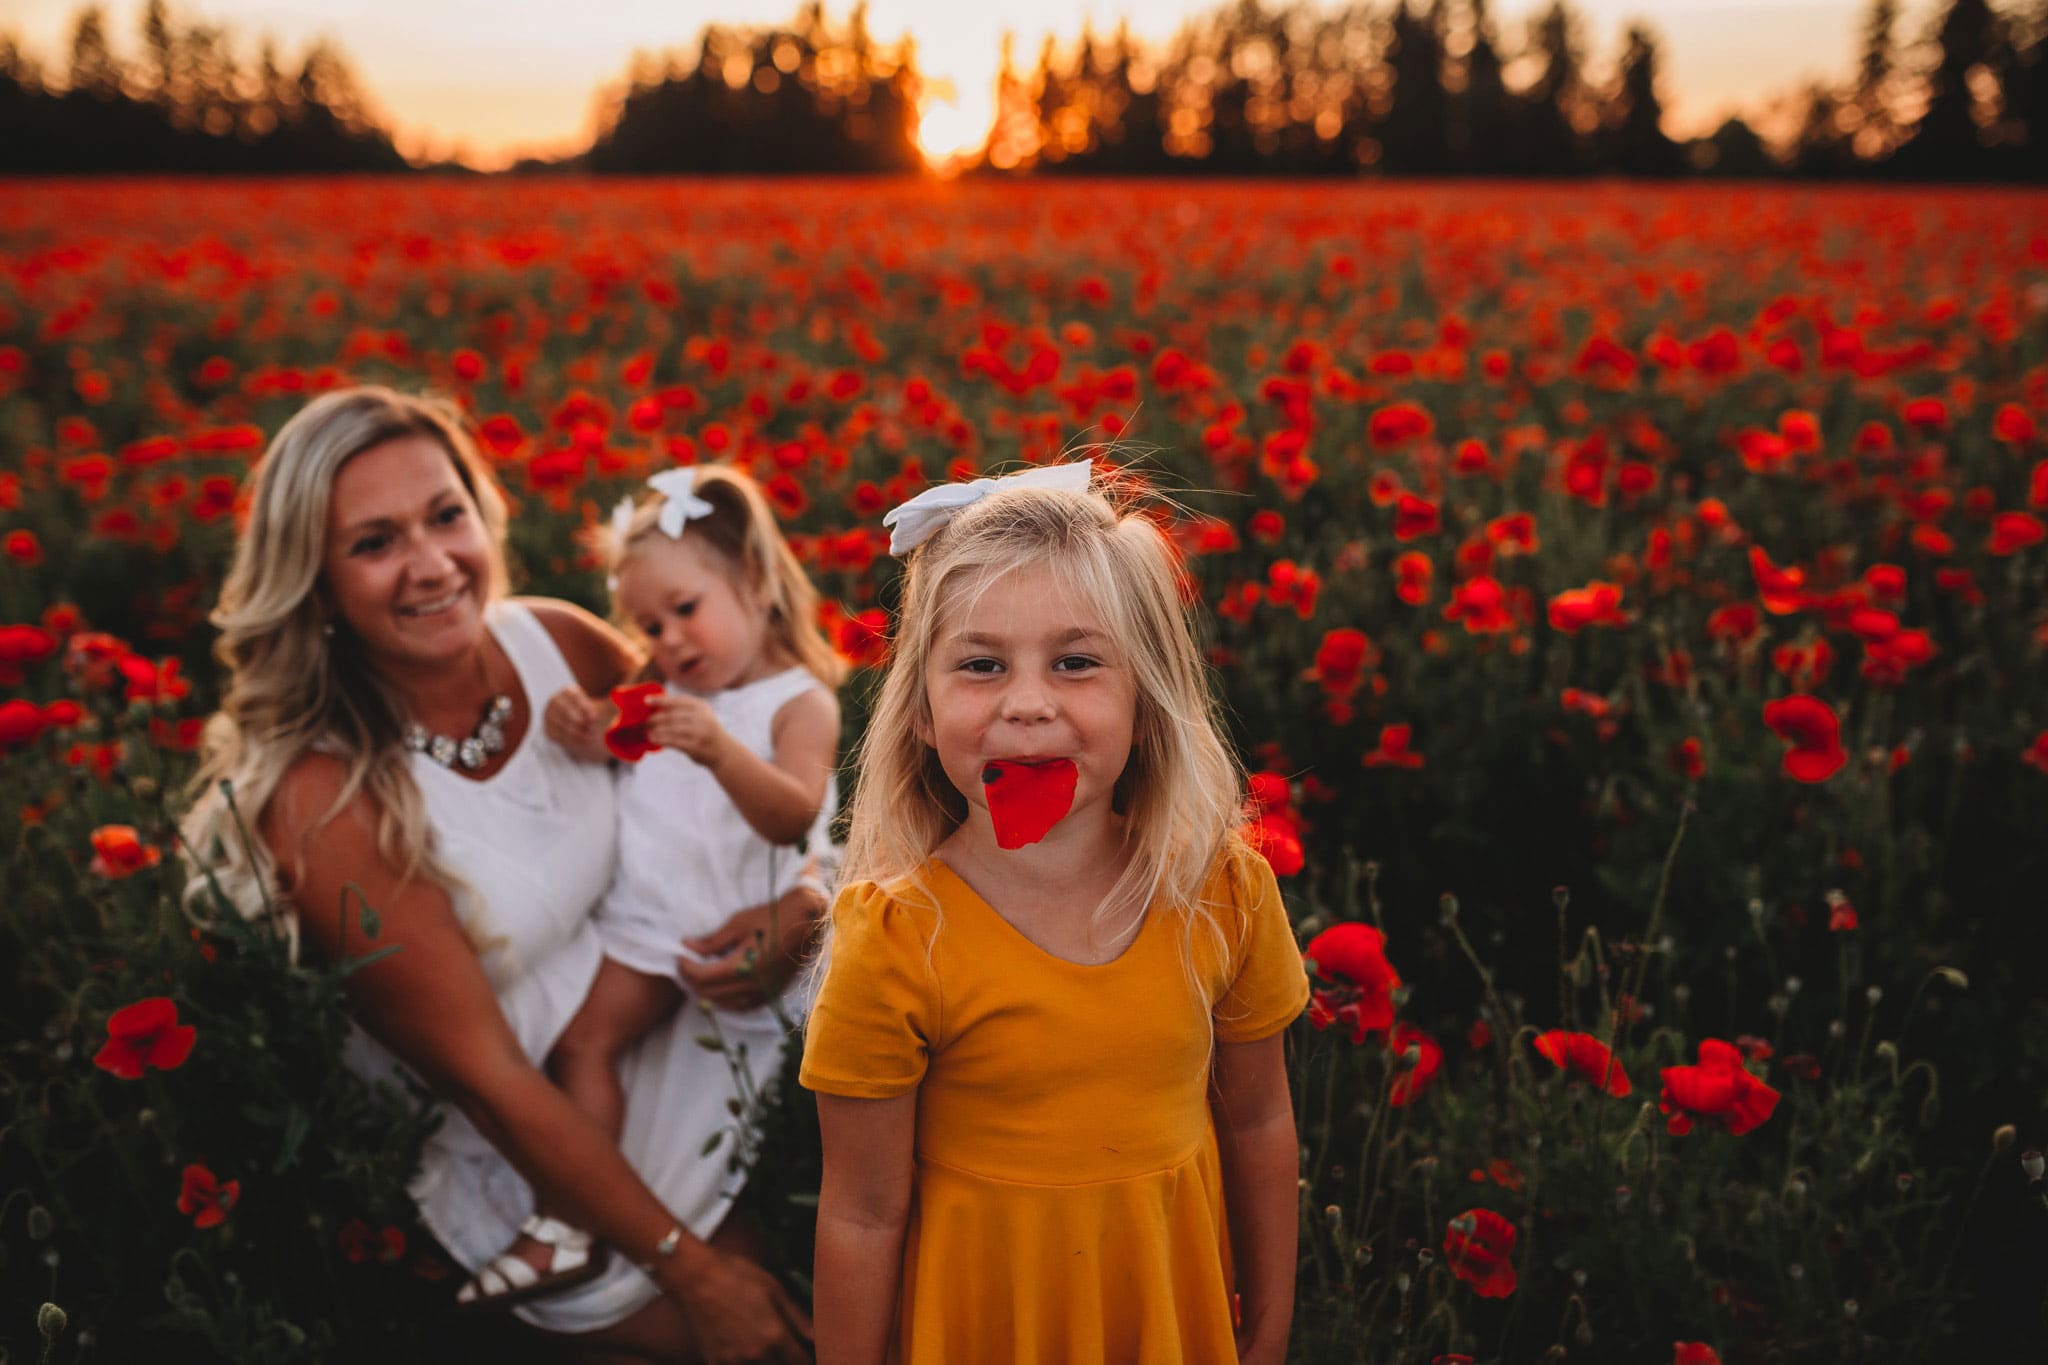 Little girl with poppy flower petal in mouth